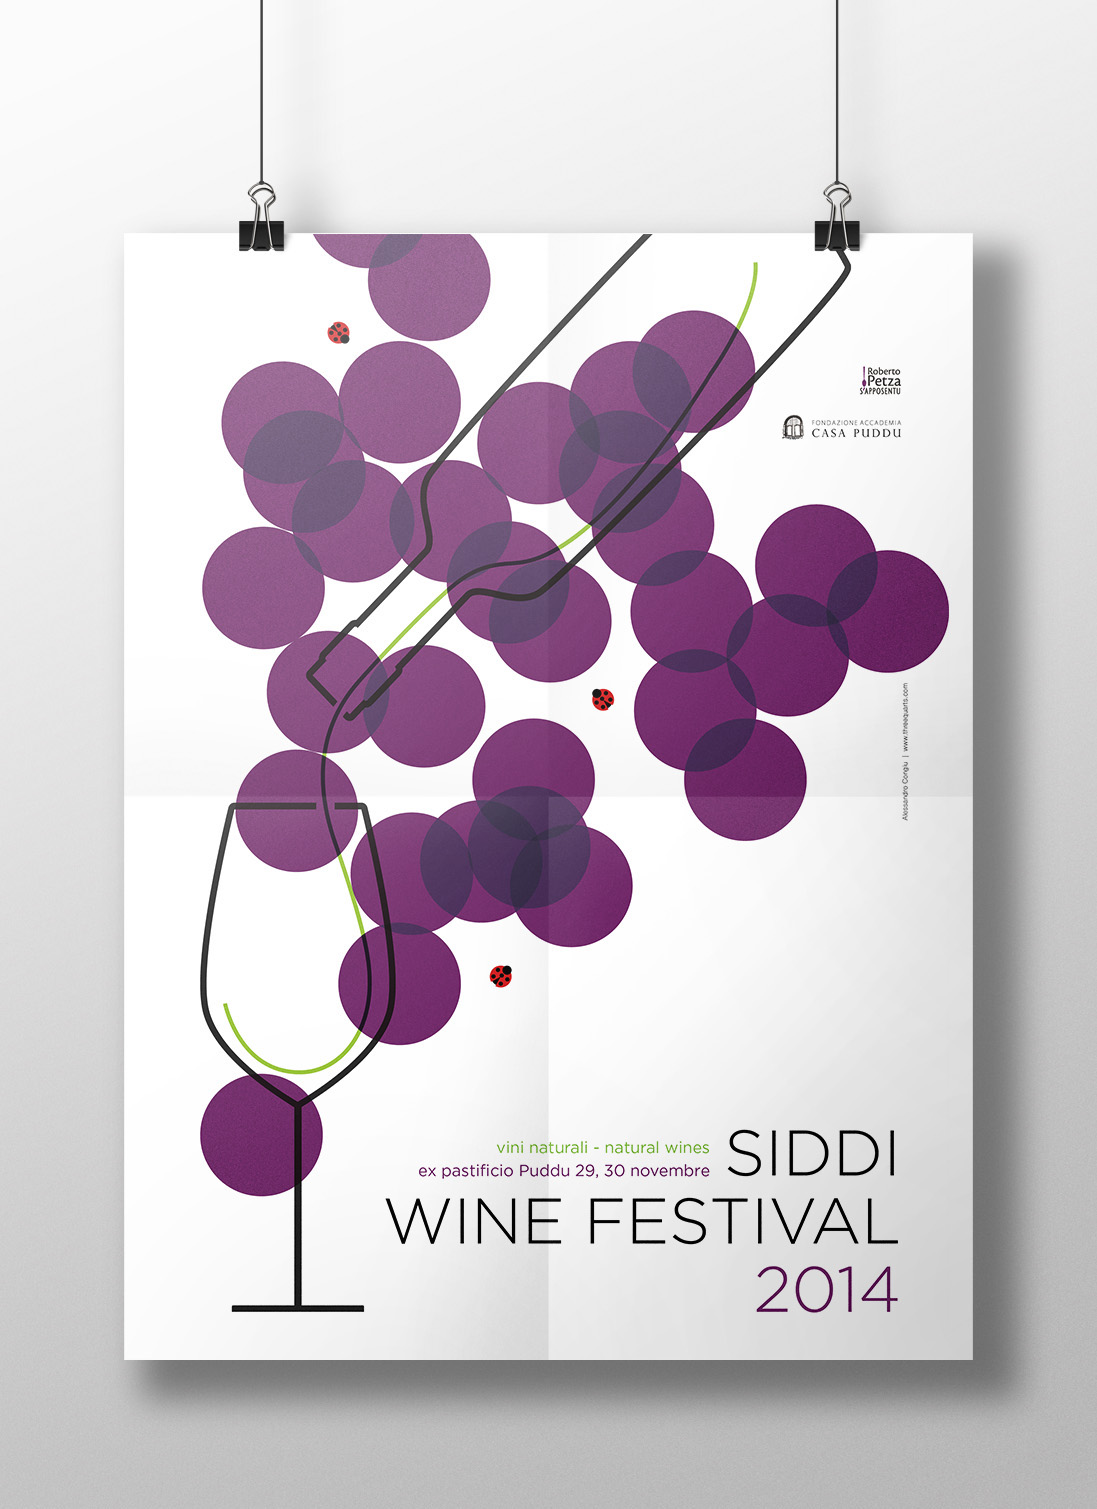 poster wine festival roberto petza Michelin star siddi sardinia sardegna